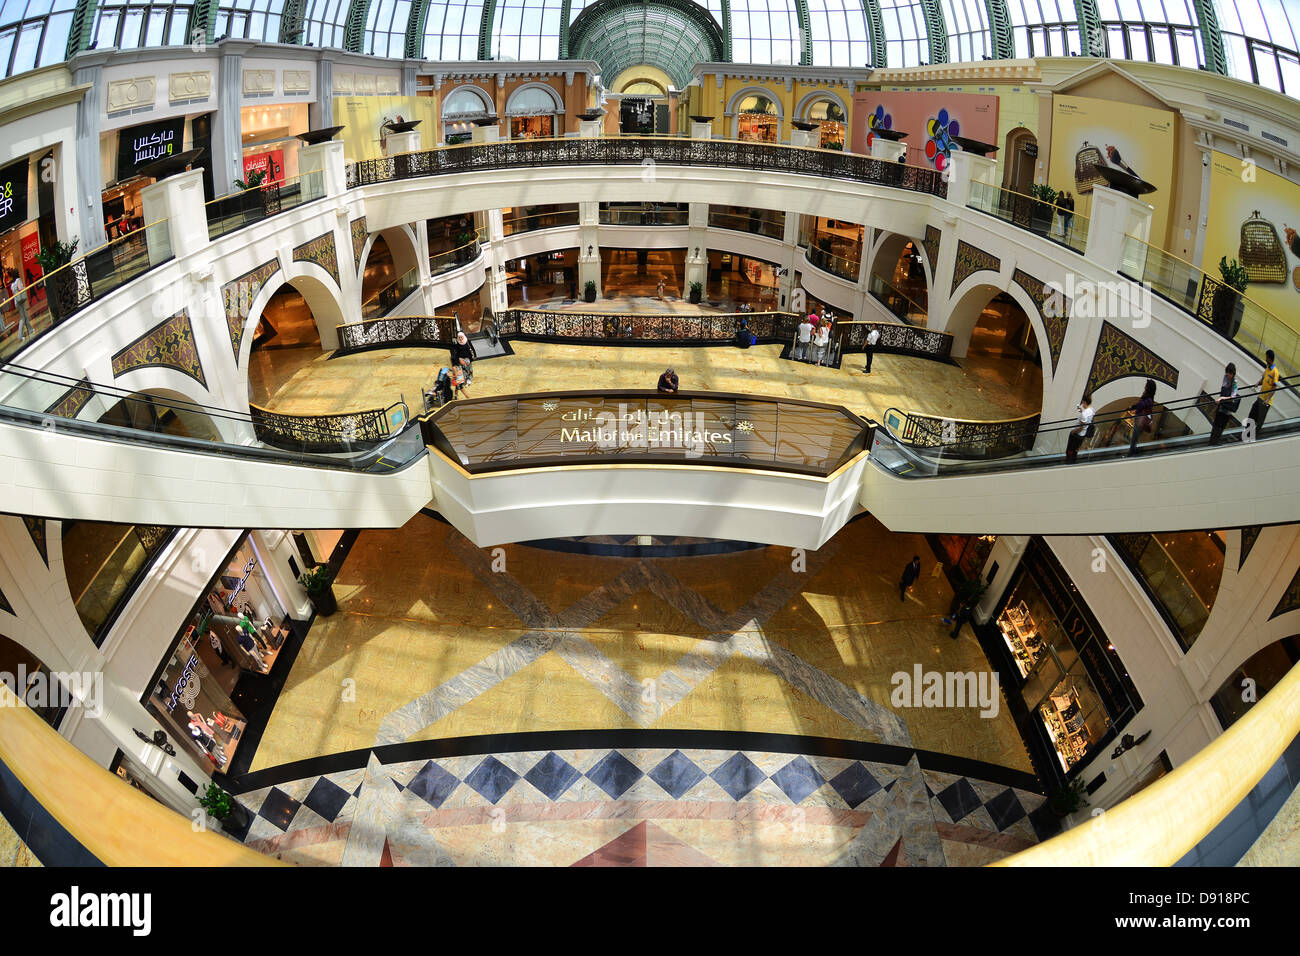 Mall of the Emirates, interior of the Mall of the Emirates, Dubai, United Arab Emirates Stock Photo